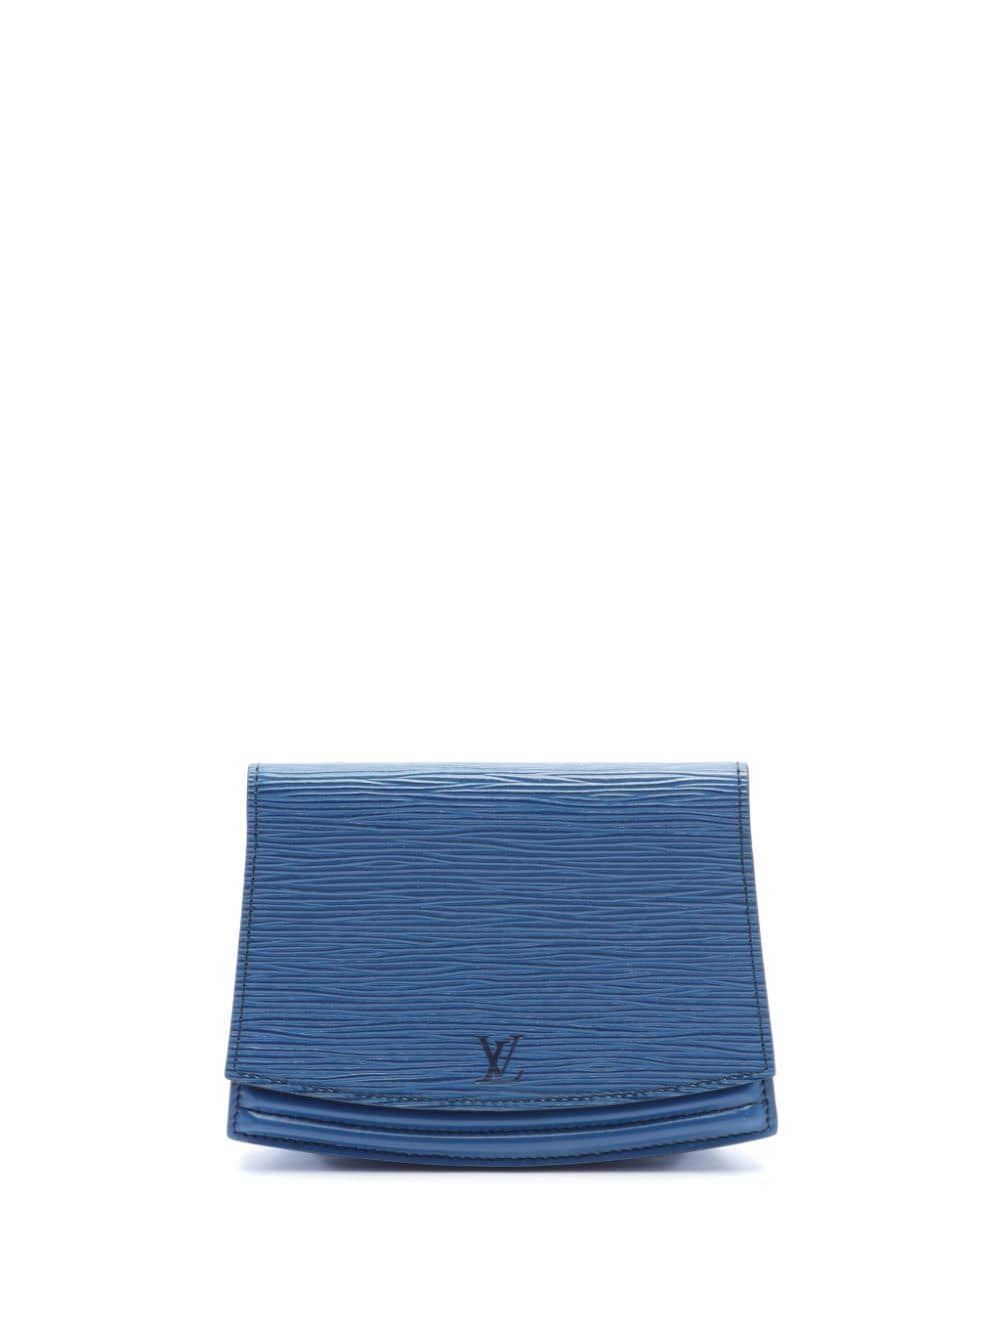 Pre-owned Louis Vuitton 1991 Épi Belt Bag In Blue